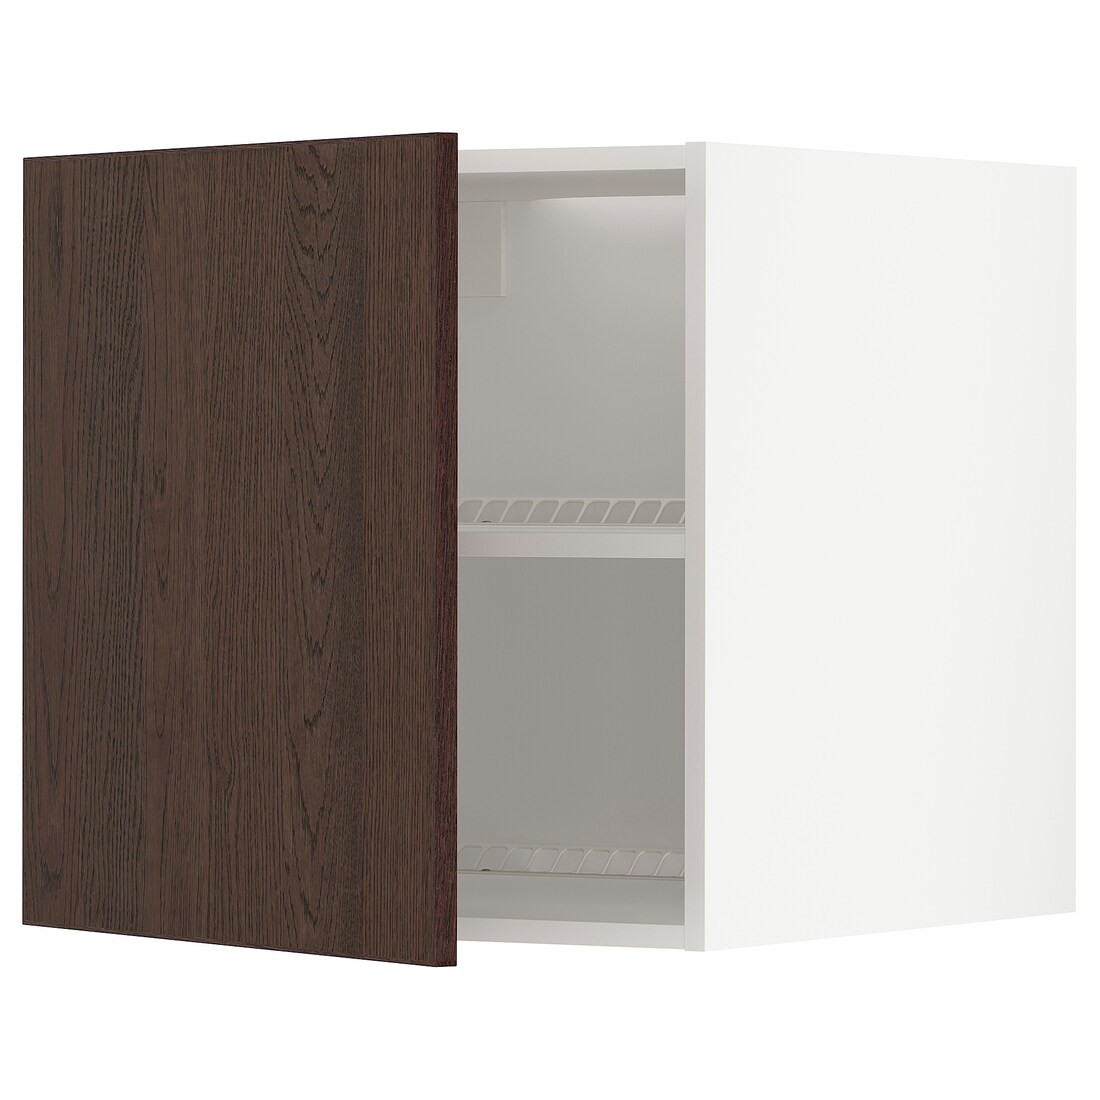 METOD МЕТОД Верхний шкаф для холодильника / морозильника, белый / Sinarp коричневый, 60x60 см